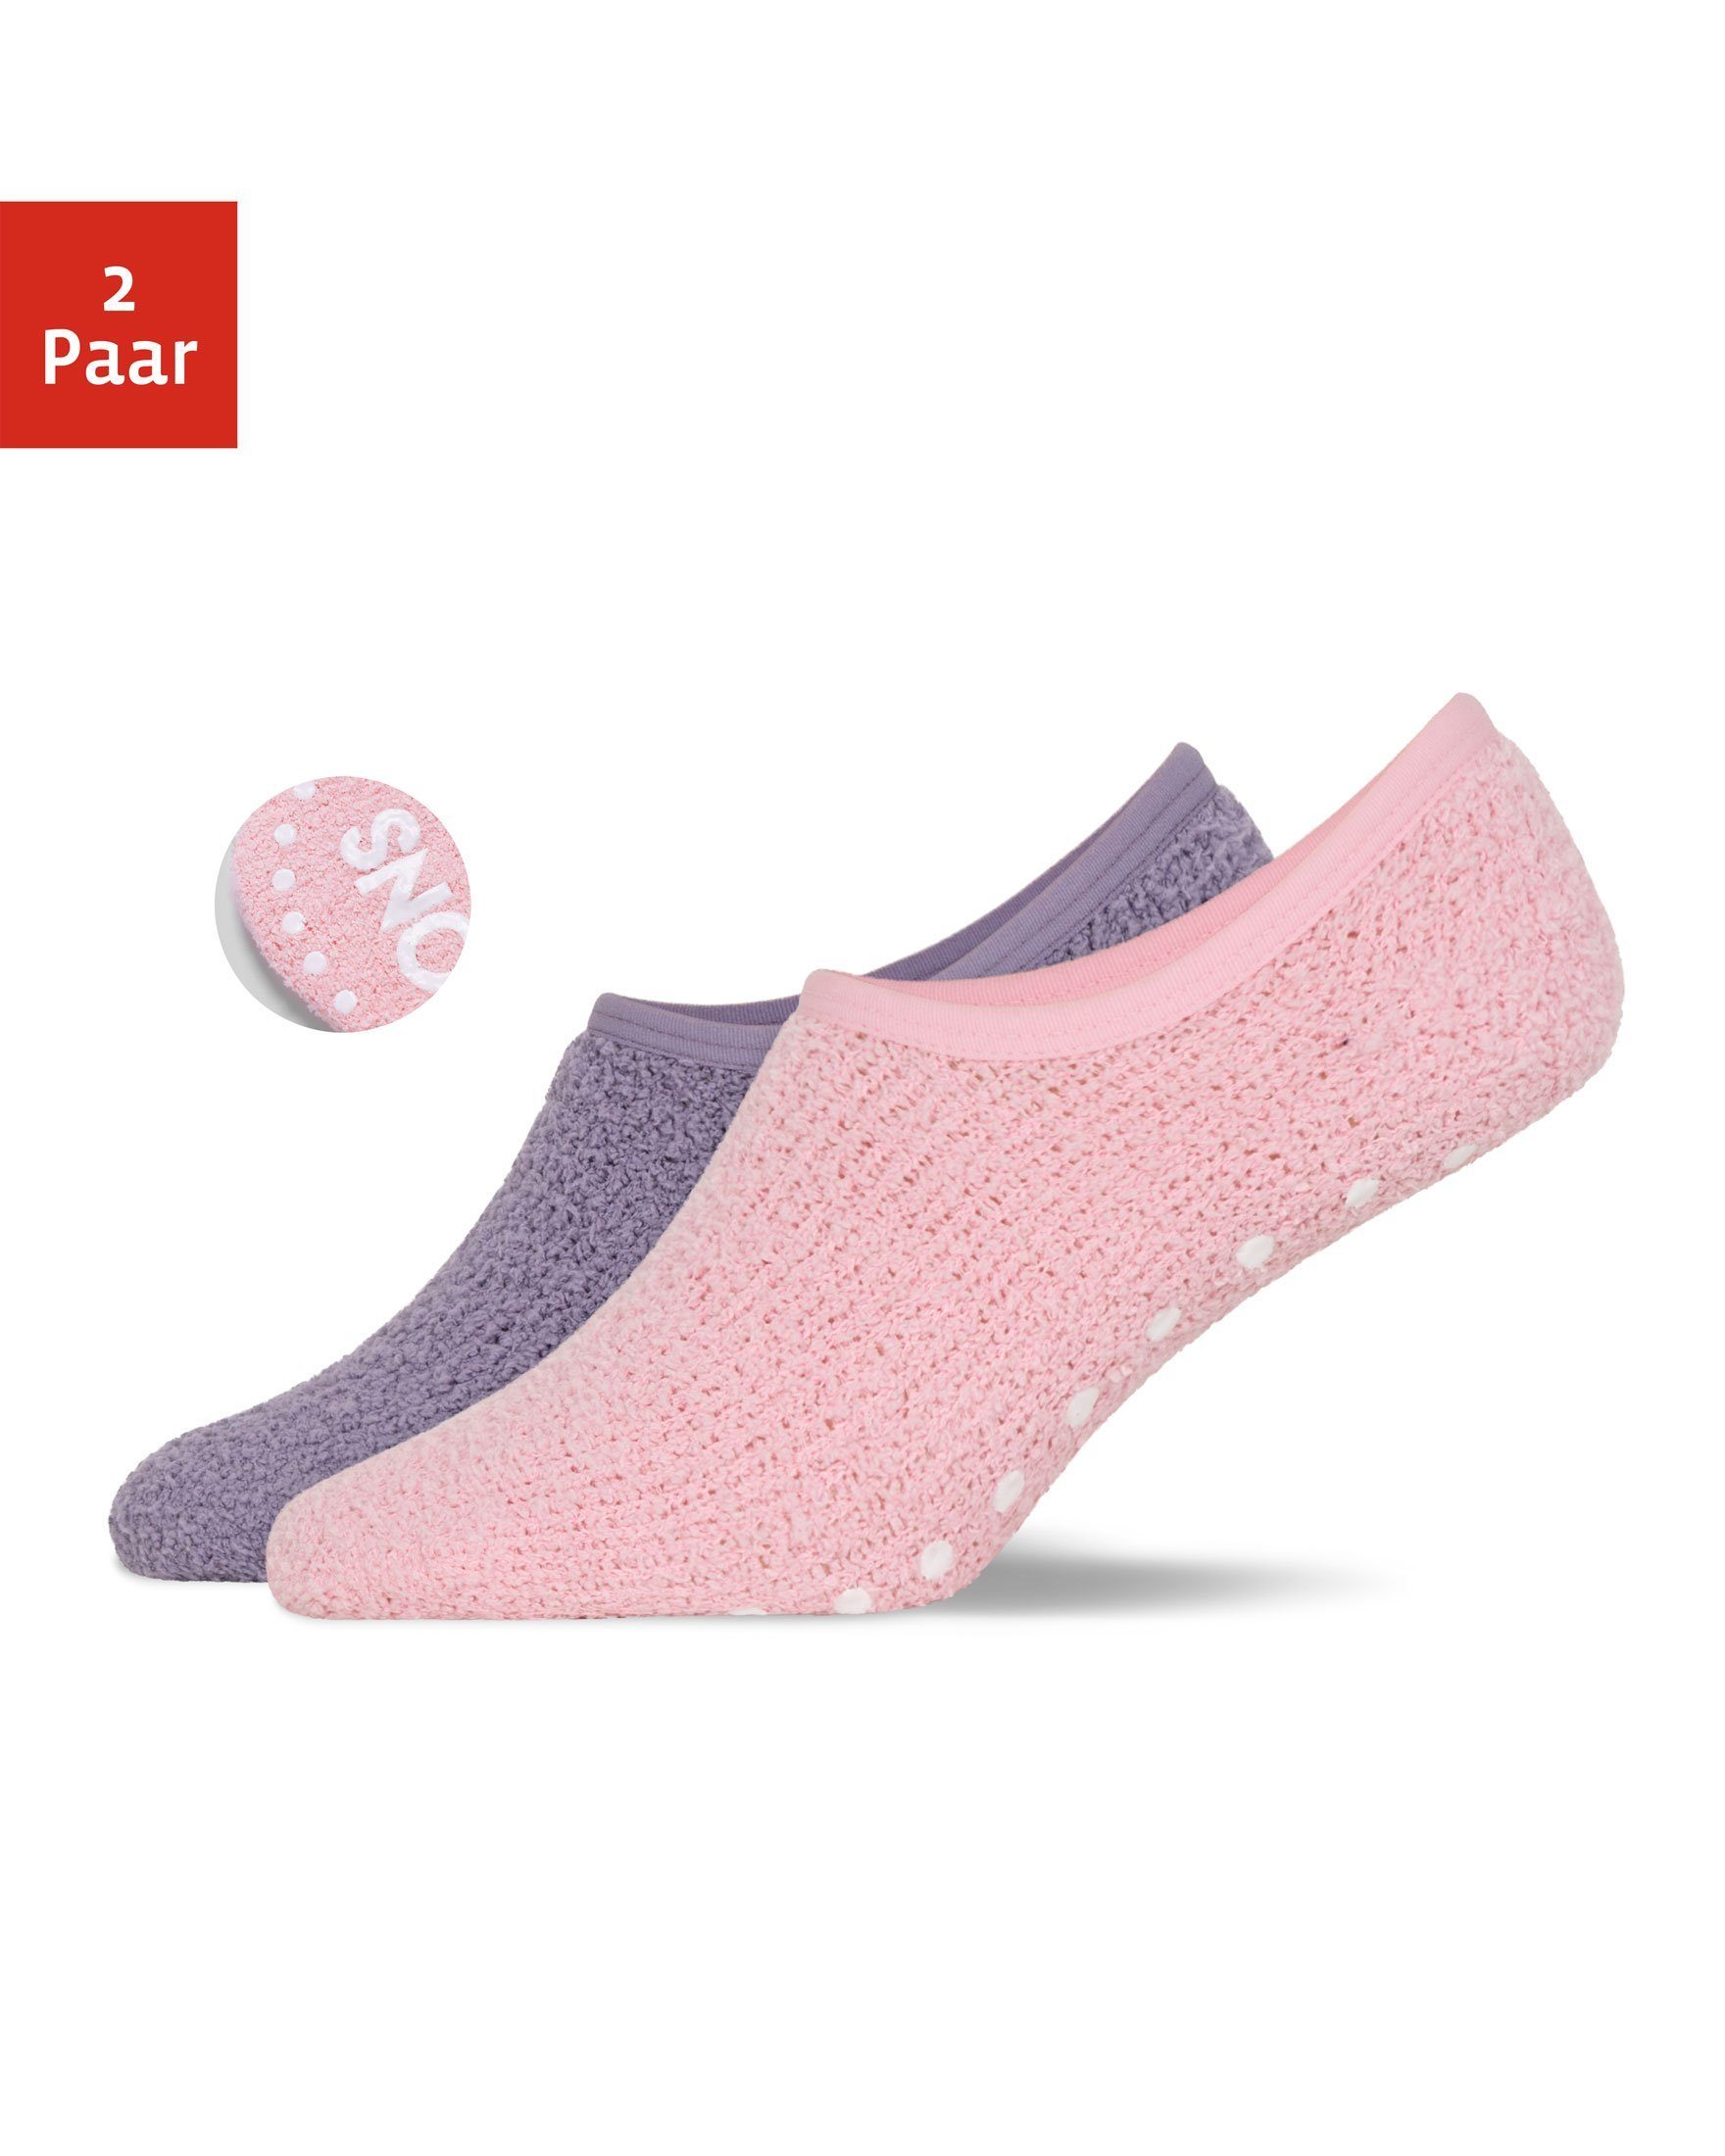 SNOCKS Füßlinge Fluffy Invisible Socks Sneaker Socken Damen Herren (2-Paar) Anti-Rutsch-Socken, kuschelig weich für den Winter Mix (Pink/Lavendel)